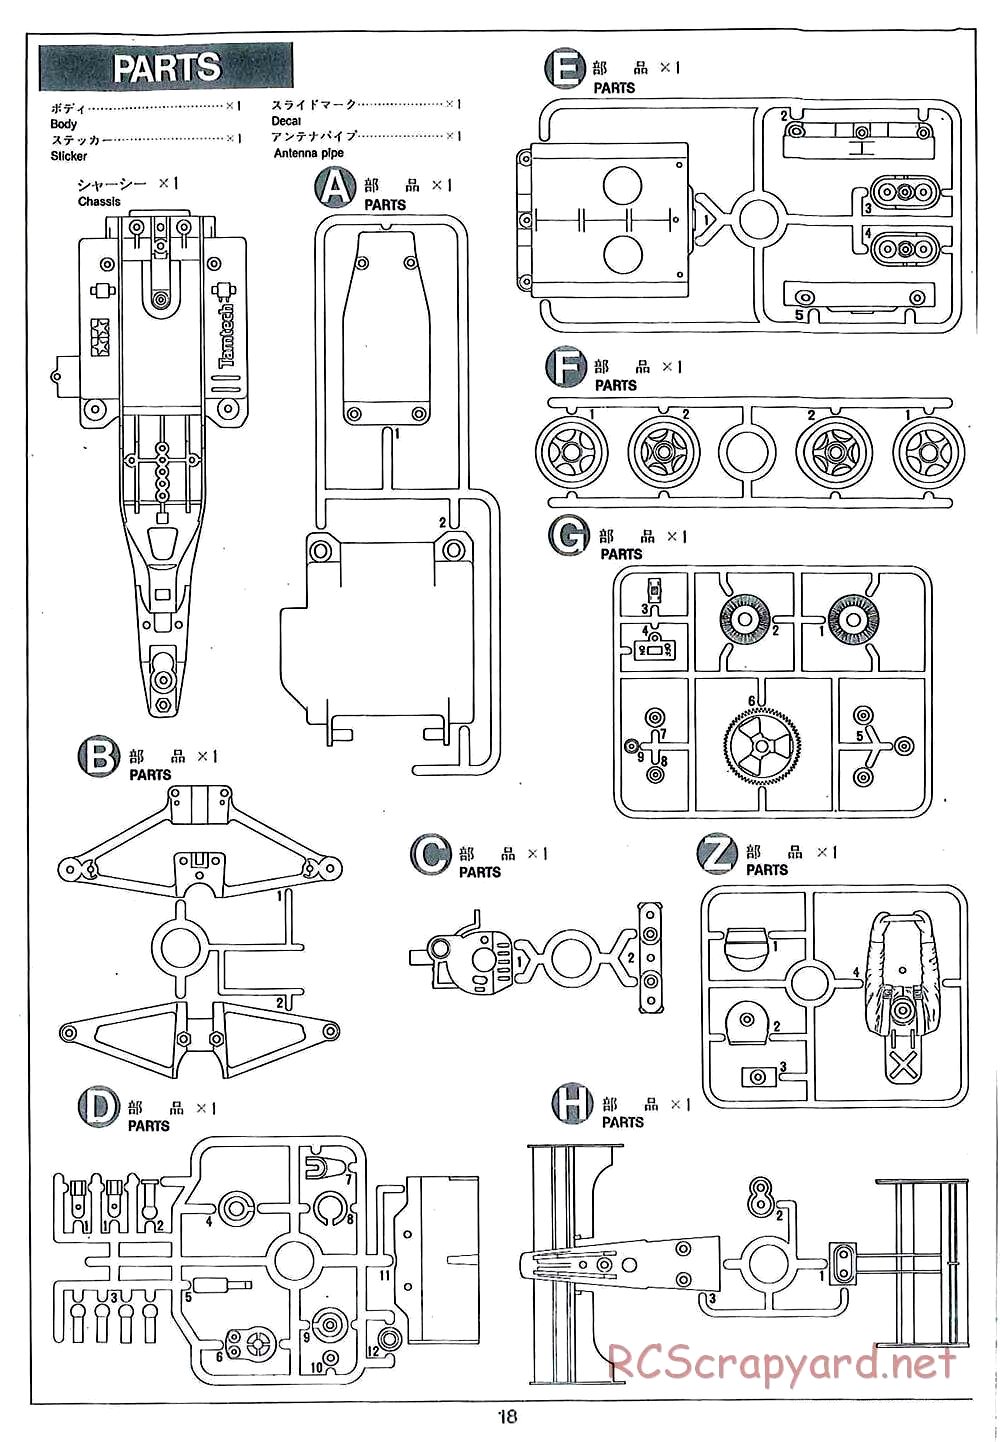 Tamiya - TamTech - F1 Chassis - Manual - Page 15